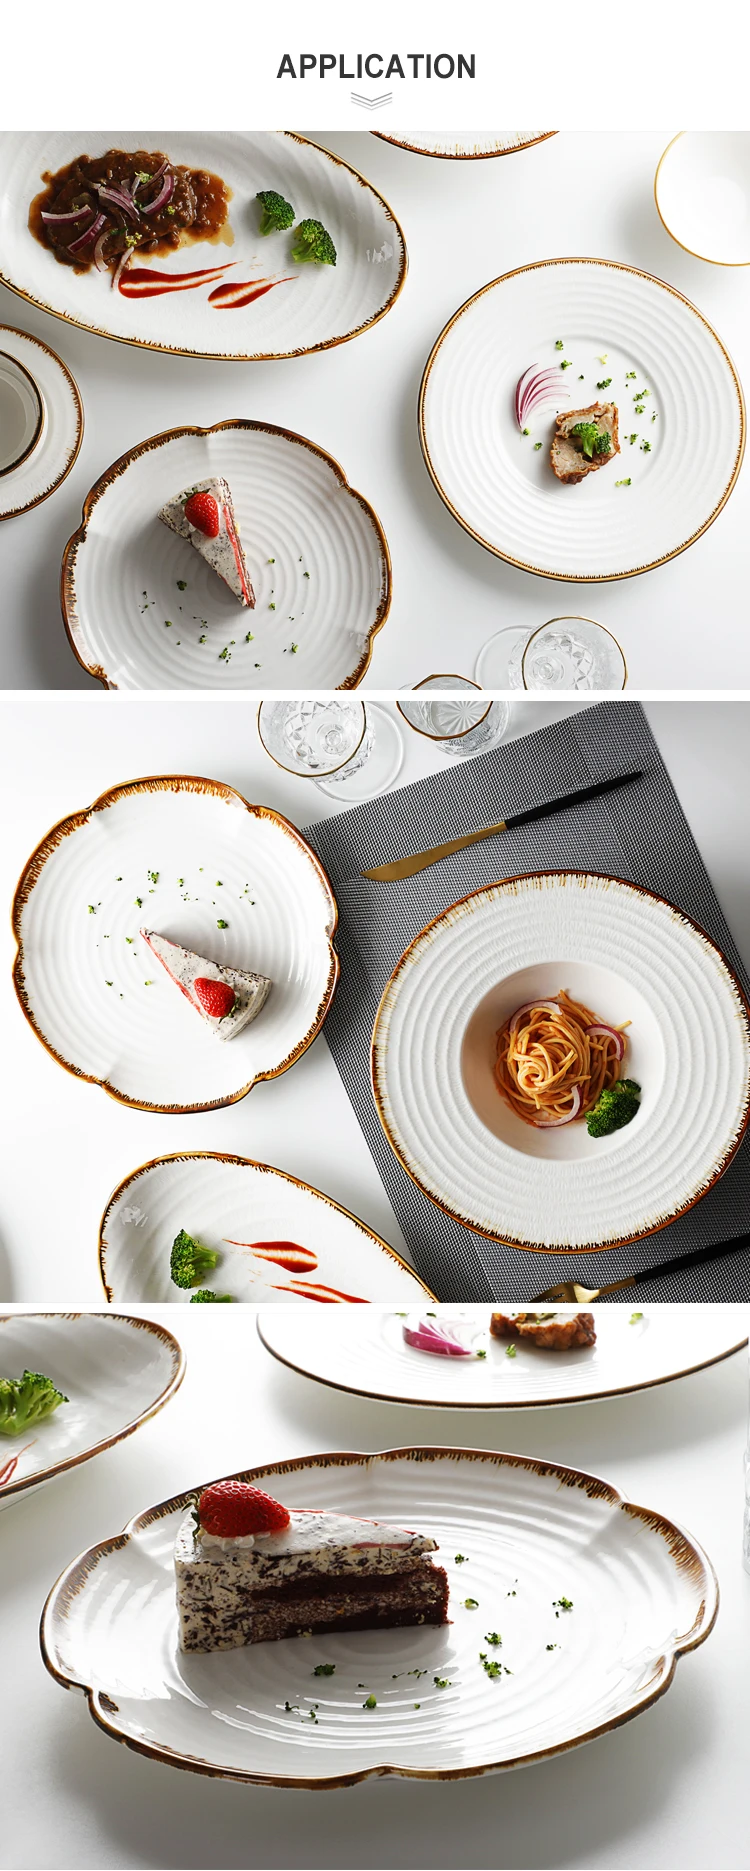 Vietnam Porcelain Royal Porcelain Dinner Tableware Ceramic Plates And Bowls*